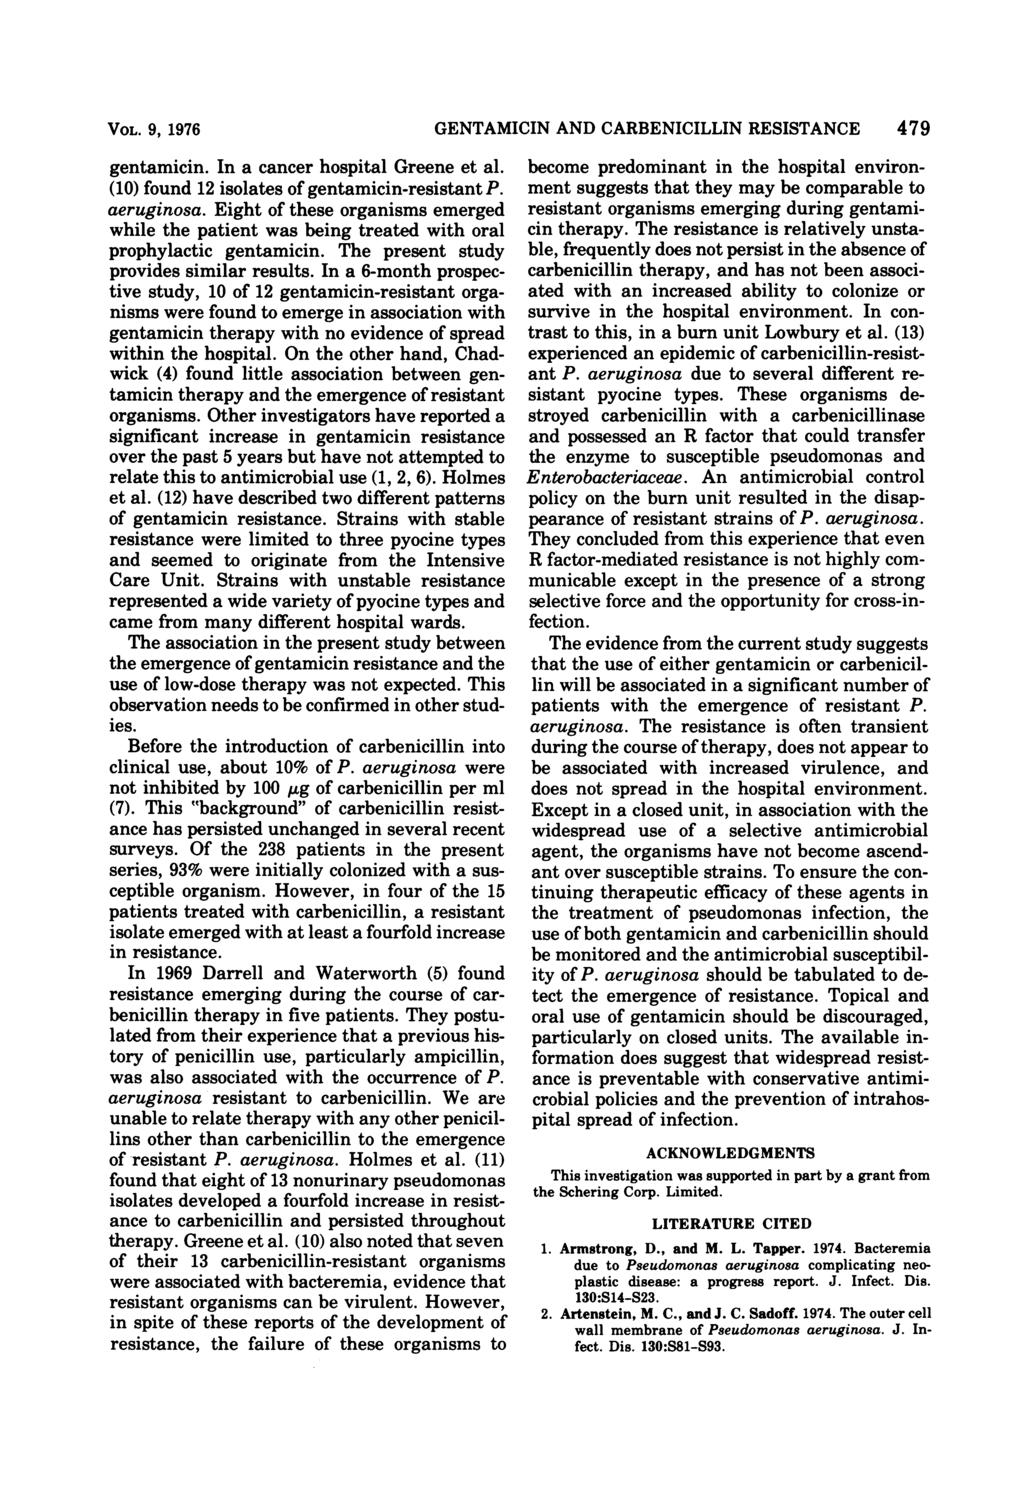 VOL. 9, 1976 gentamicin. In a cancer hospital Greene et al. (1) found 12 isolates of gentamicin-resistant P. aeruginosa.